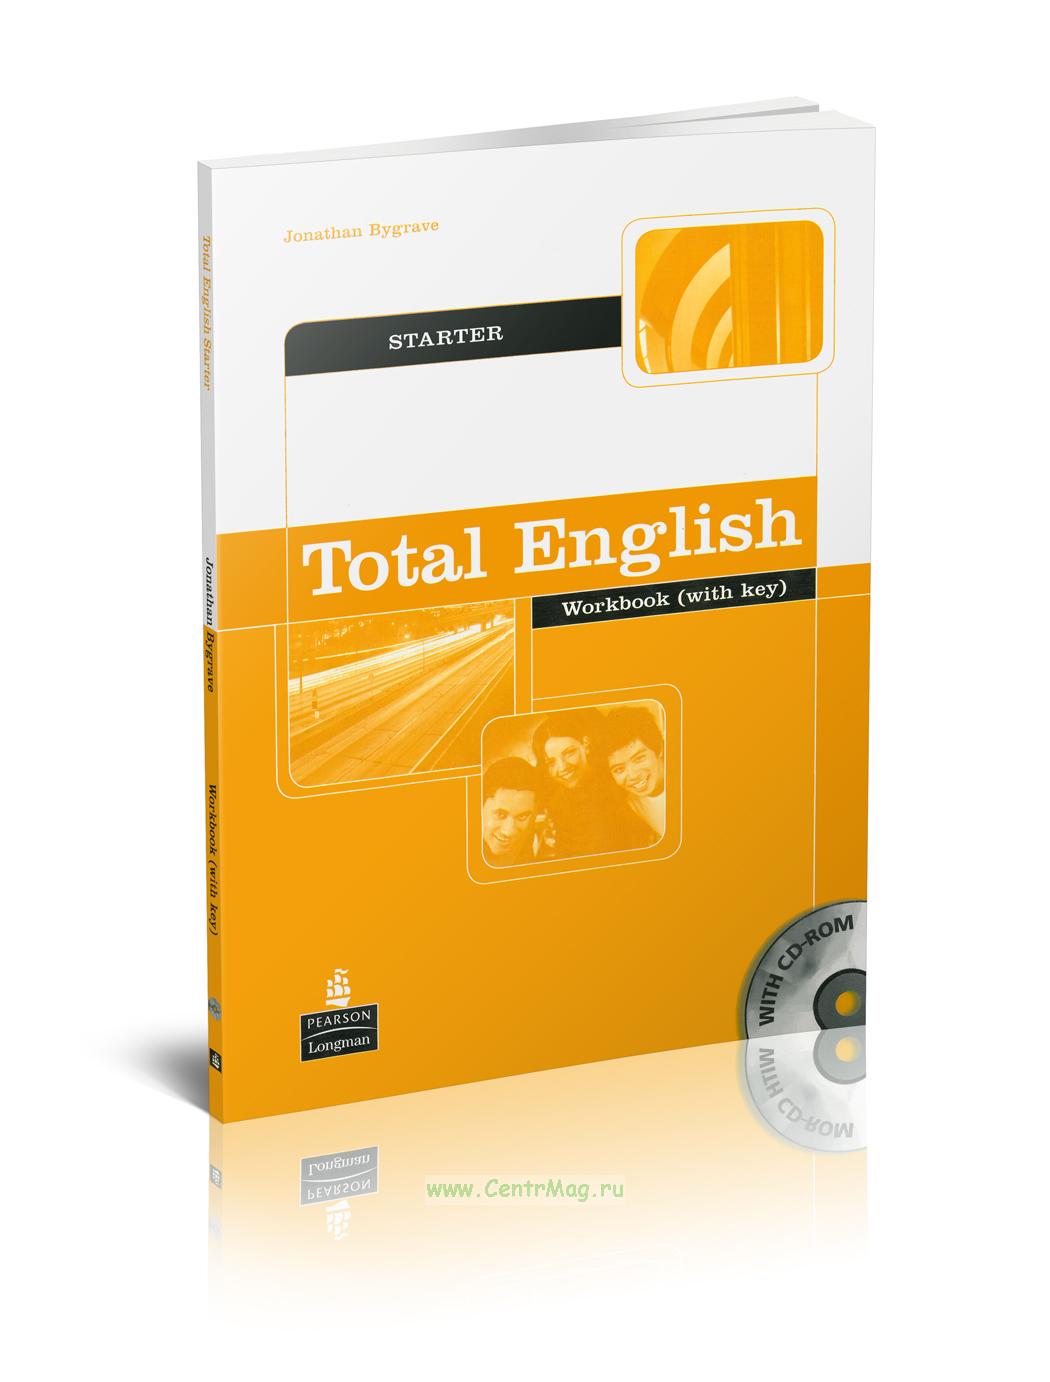 New total english workbook. Тотал Инглиш стартер. New total English. Учебники по английскому total English. Workbook (with Key).